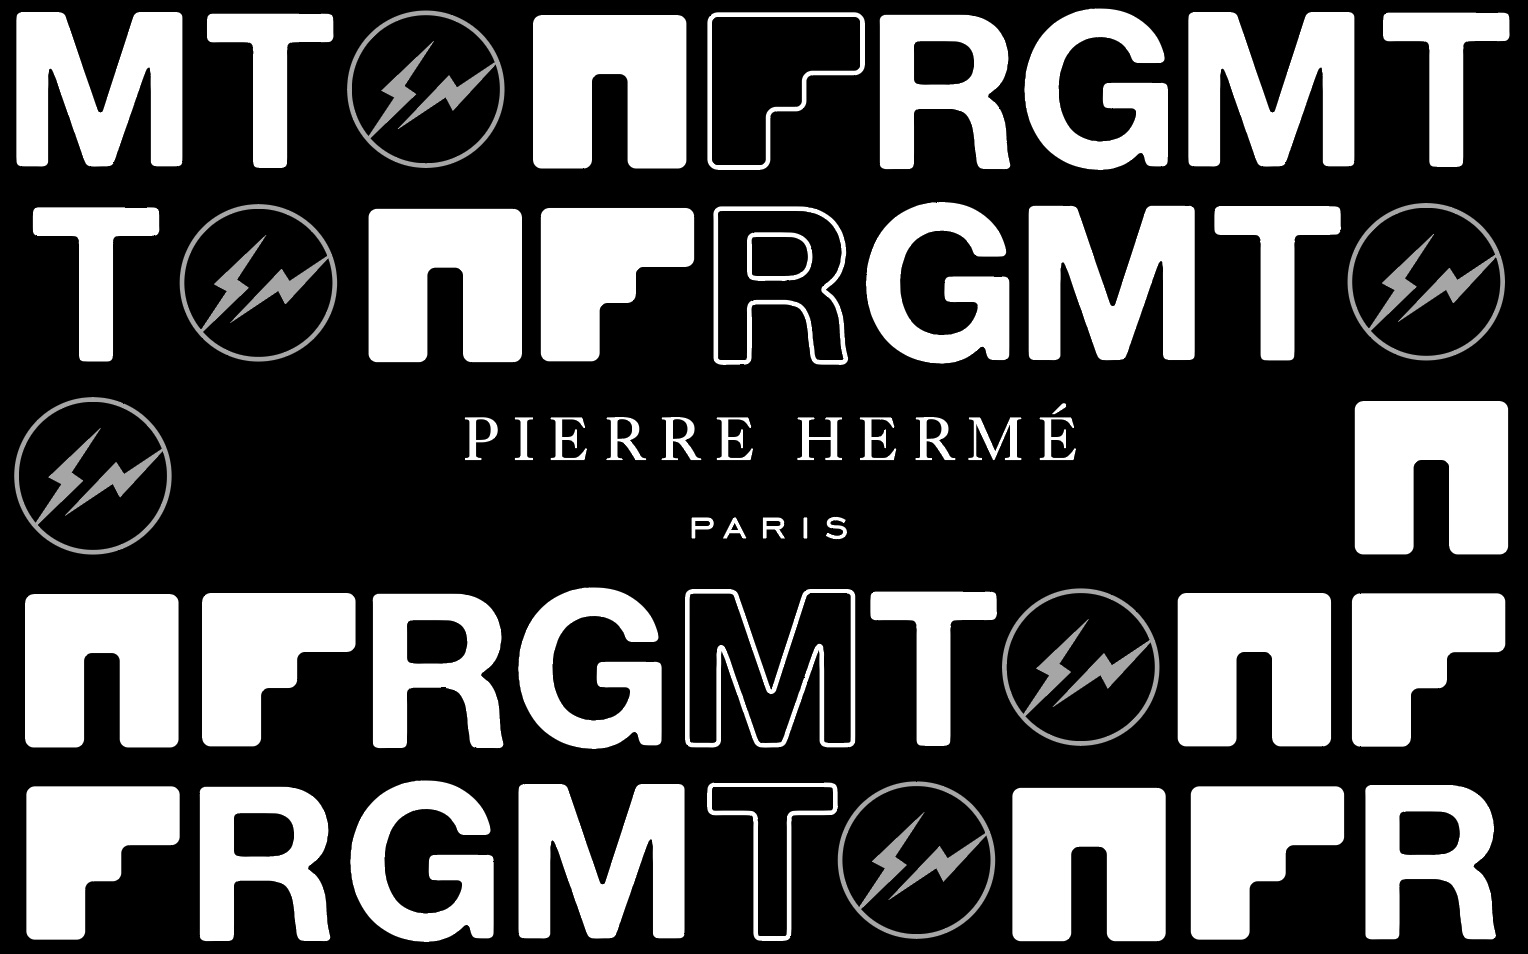 5月26日~6月28日までの期間限定 NFRGMT x PIERRE HERMÉ PARIS